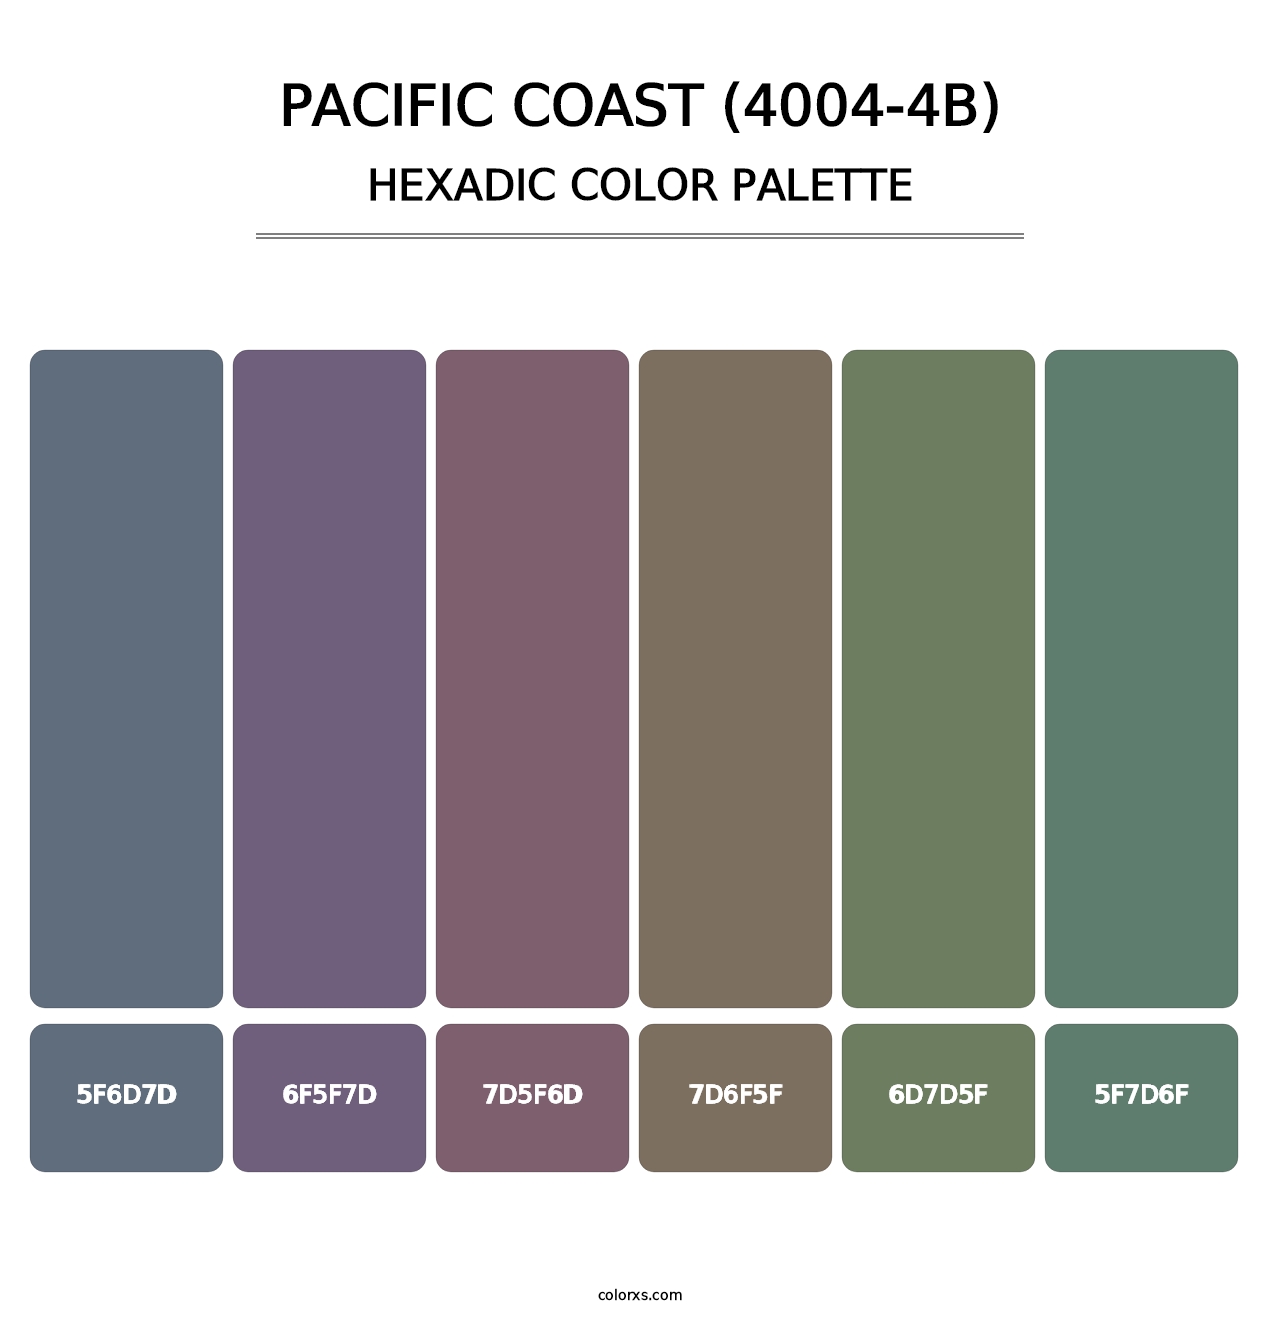 Pacific Coast (4004-4B) - Hexadic Color Palette